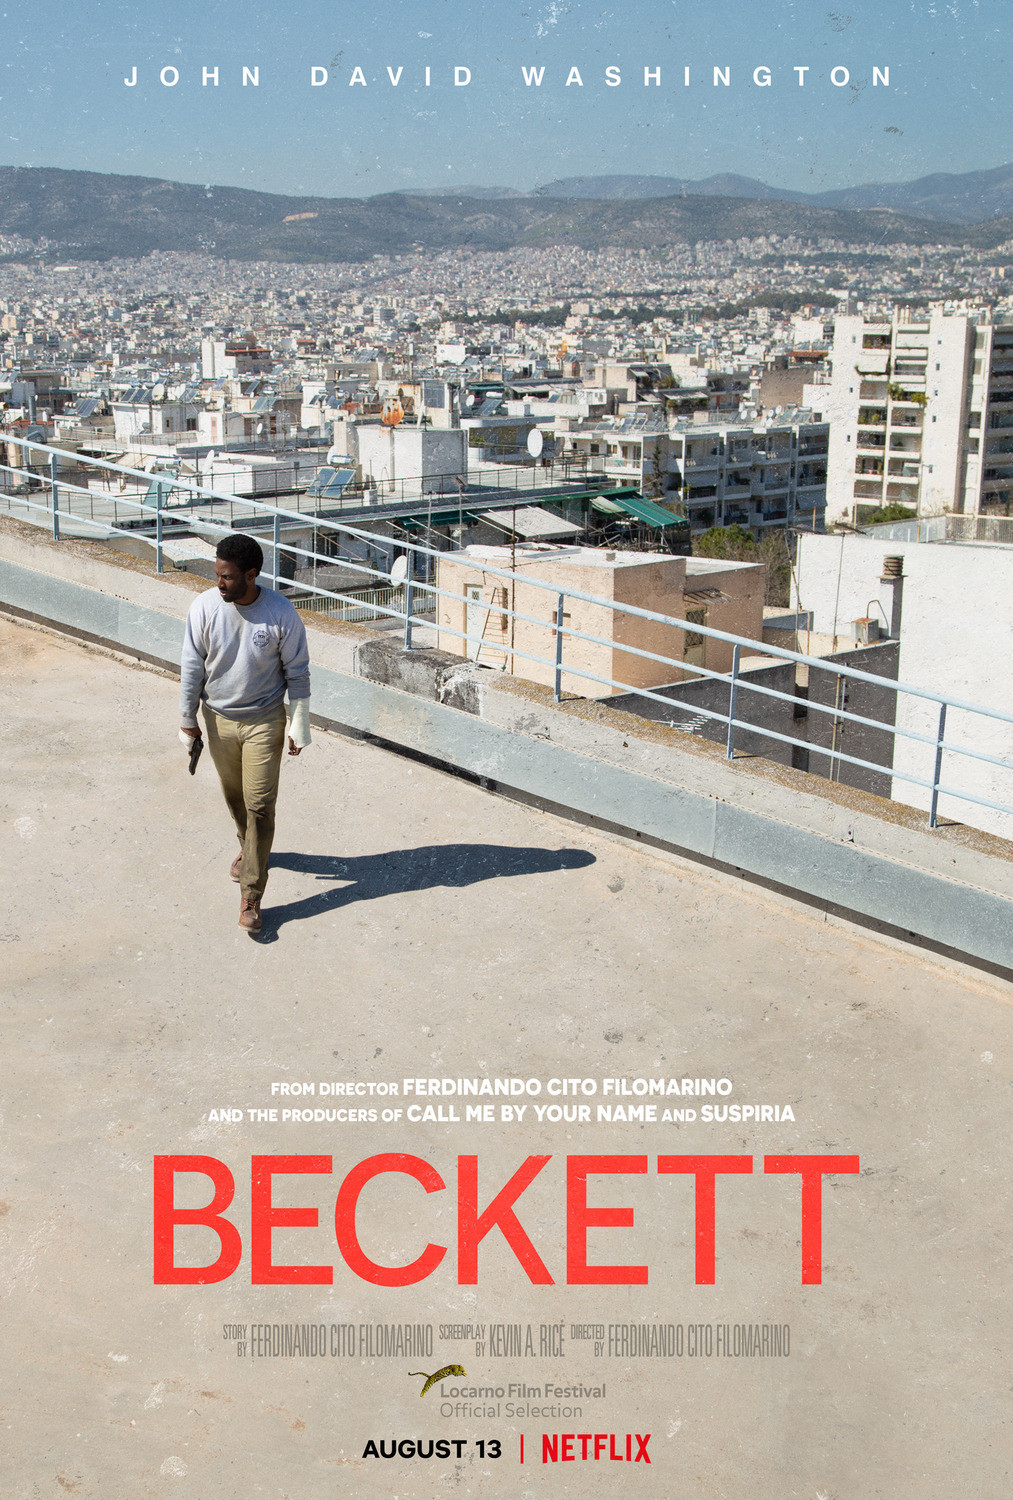  L’affiche du film «Beckett», avec John David Washington.  (Photo: Netflix)